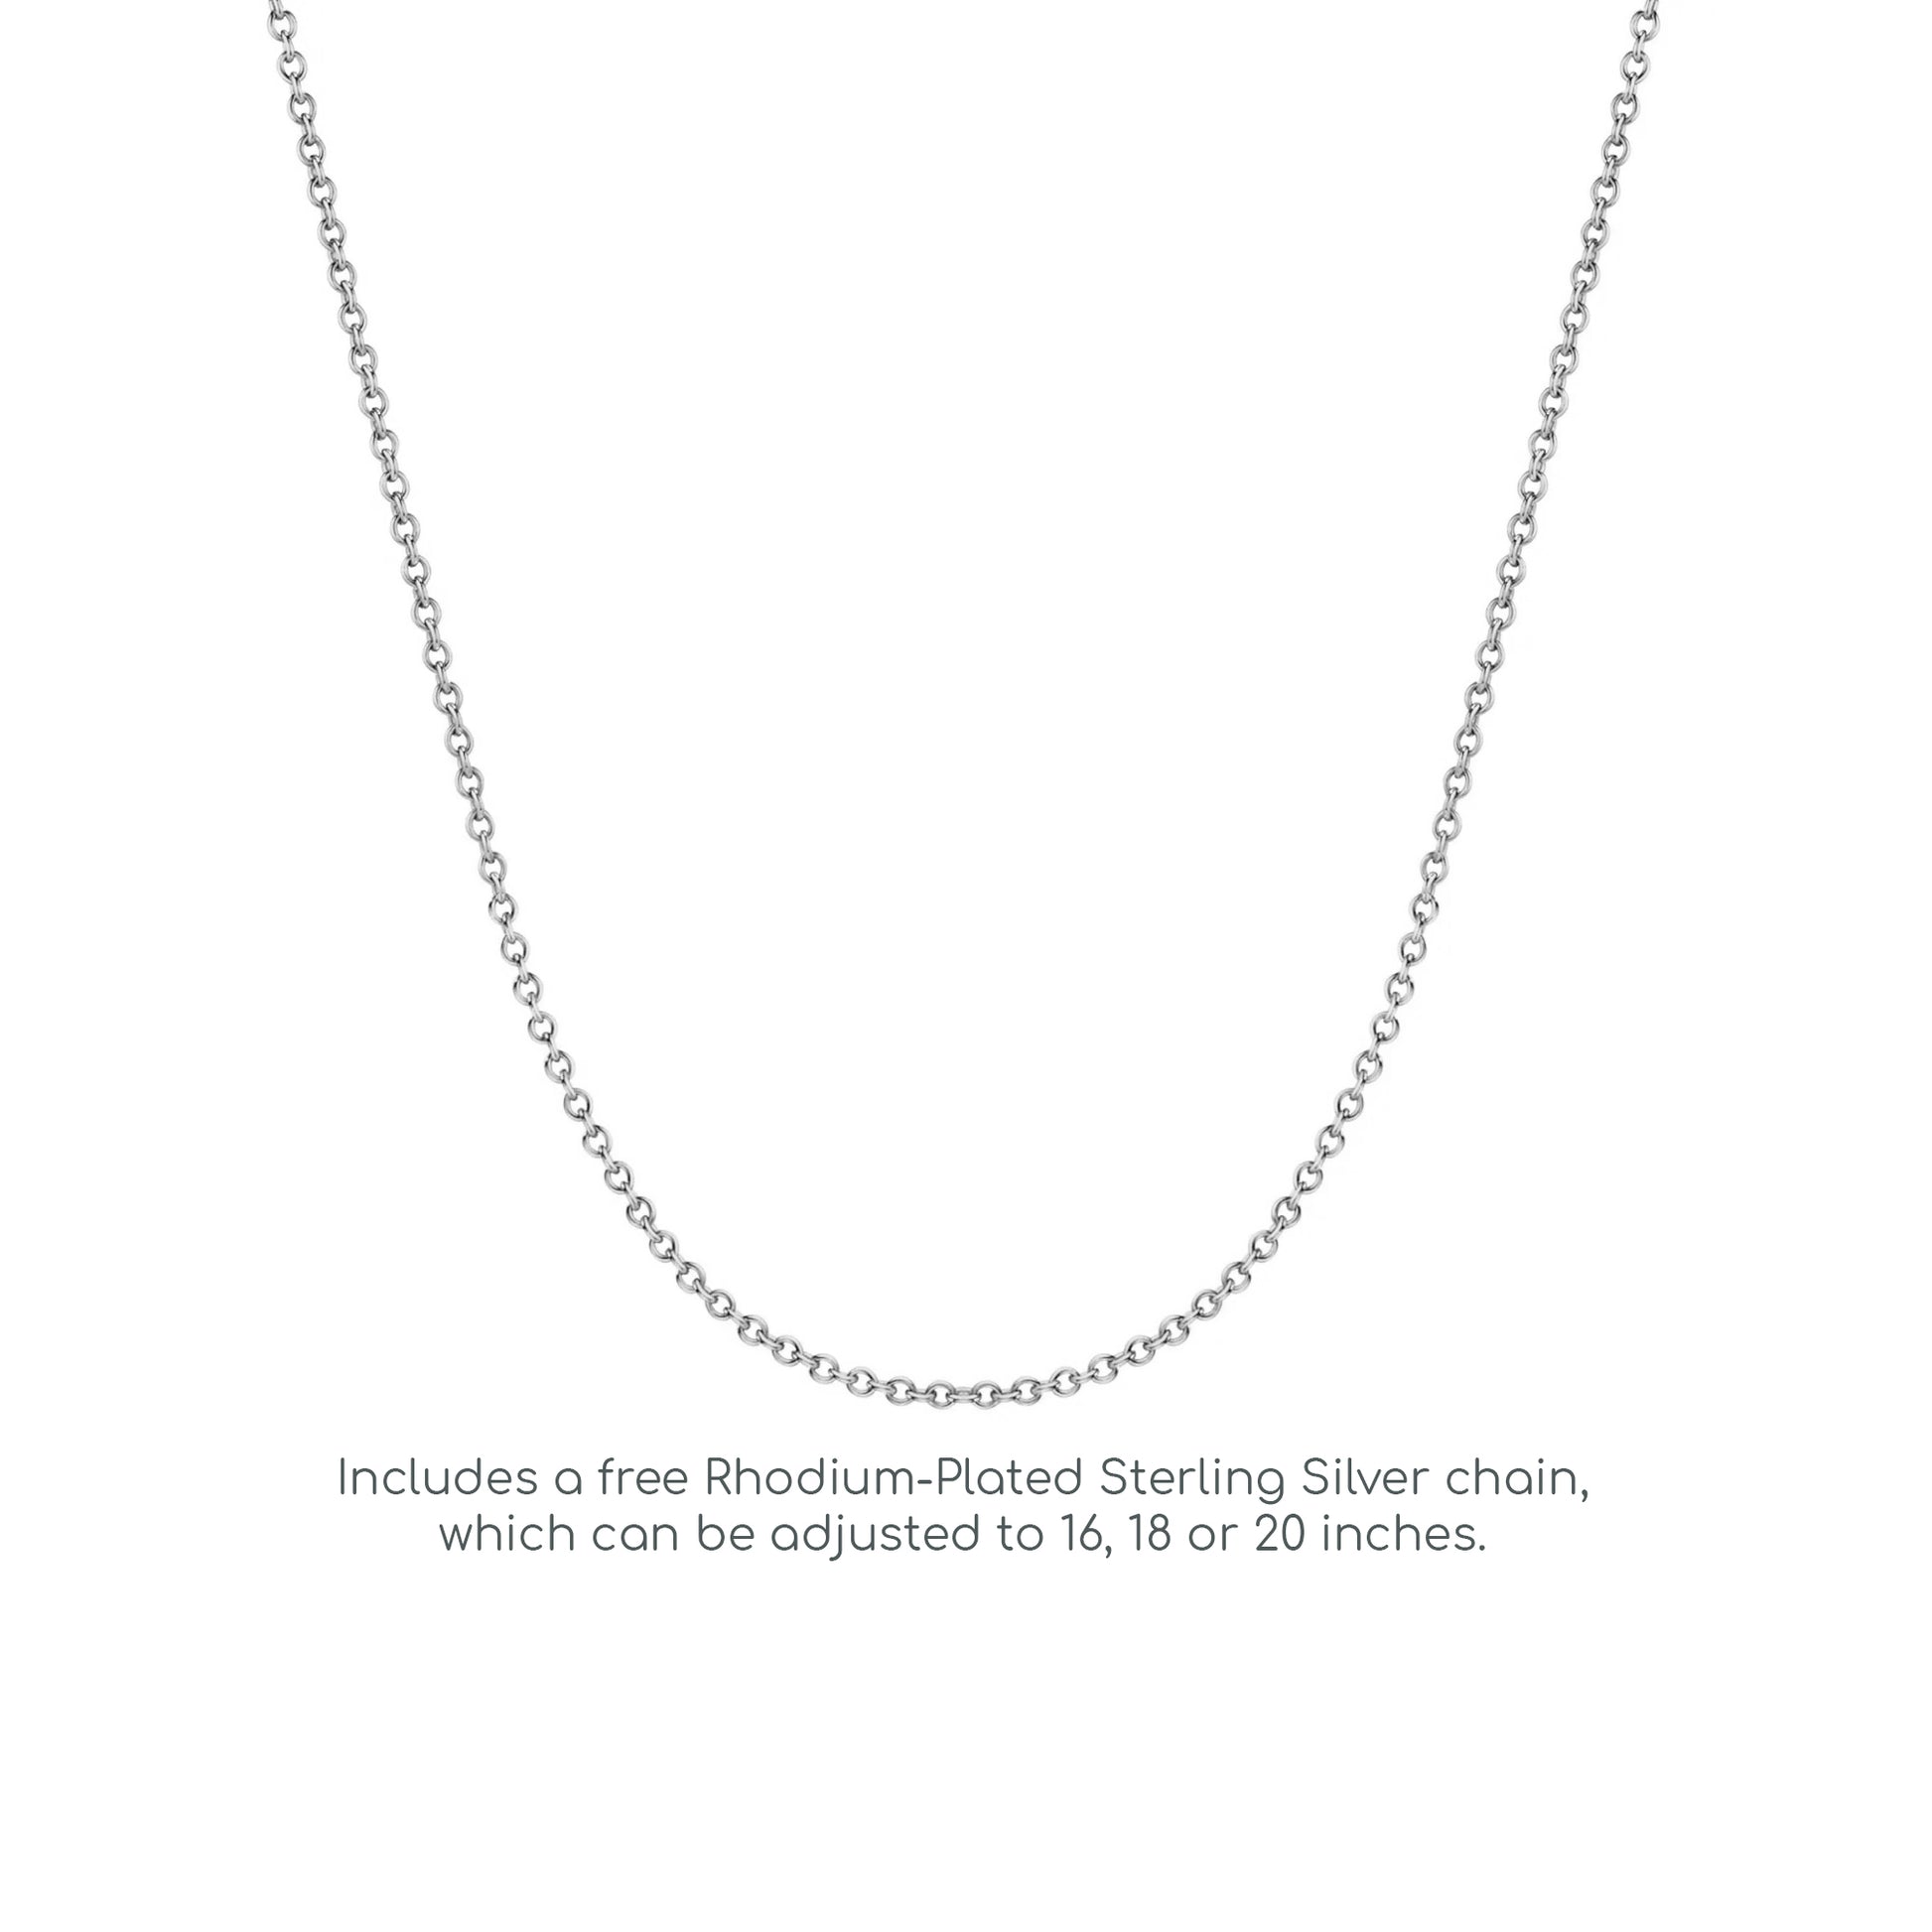 Silver  CZ Love Heart Pendant Necklace 18 inch - GVP278